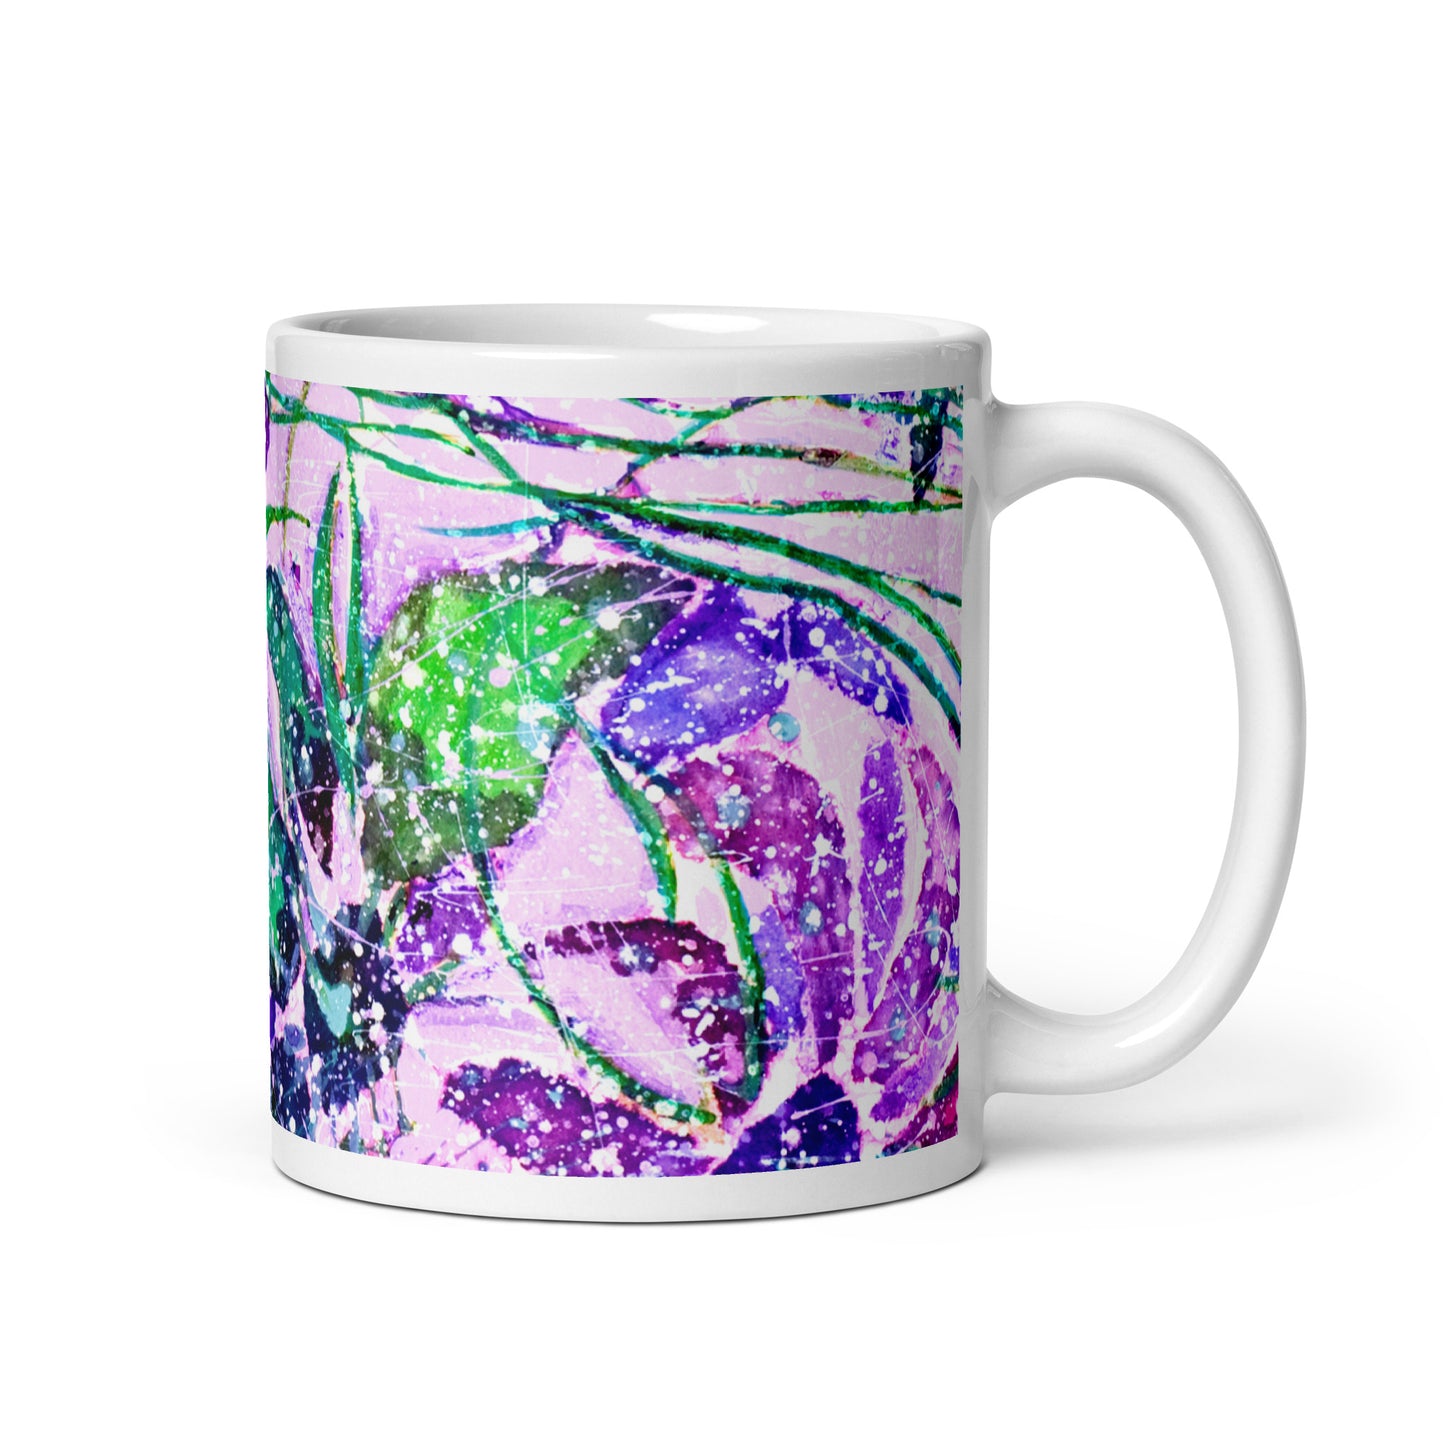 Purple Flowers Abstract White glossy mug